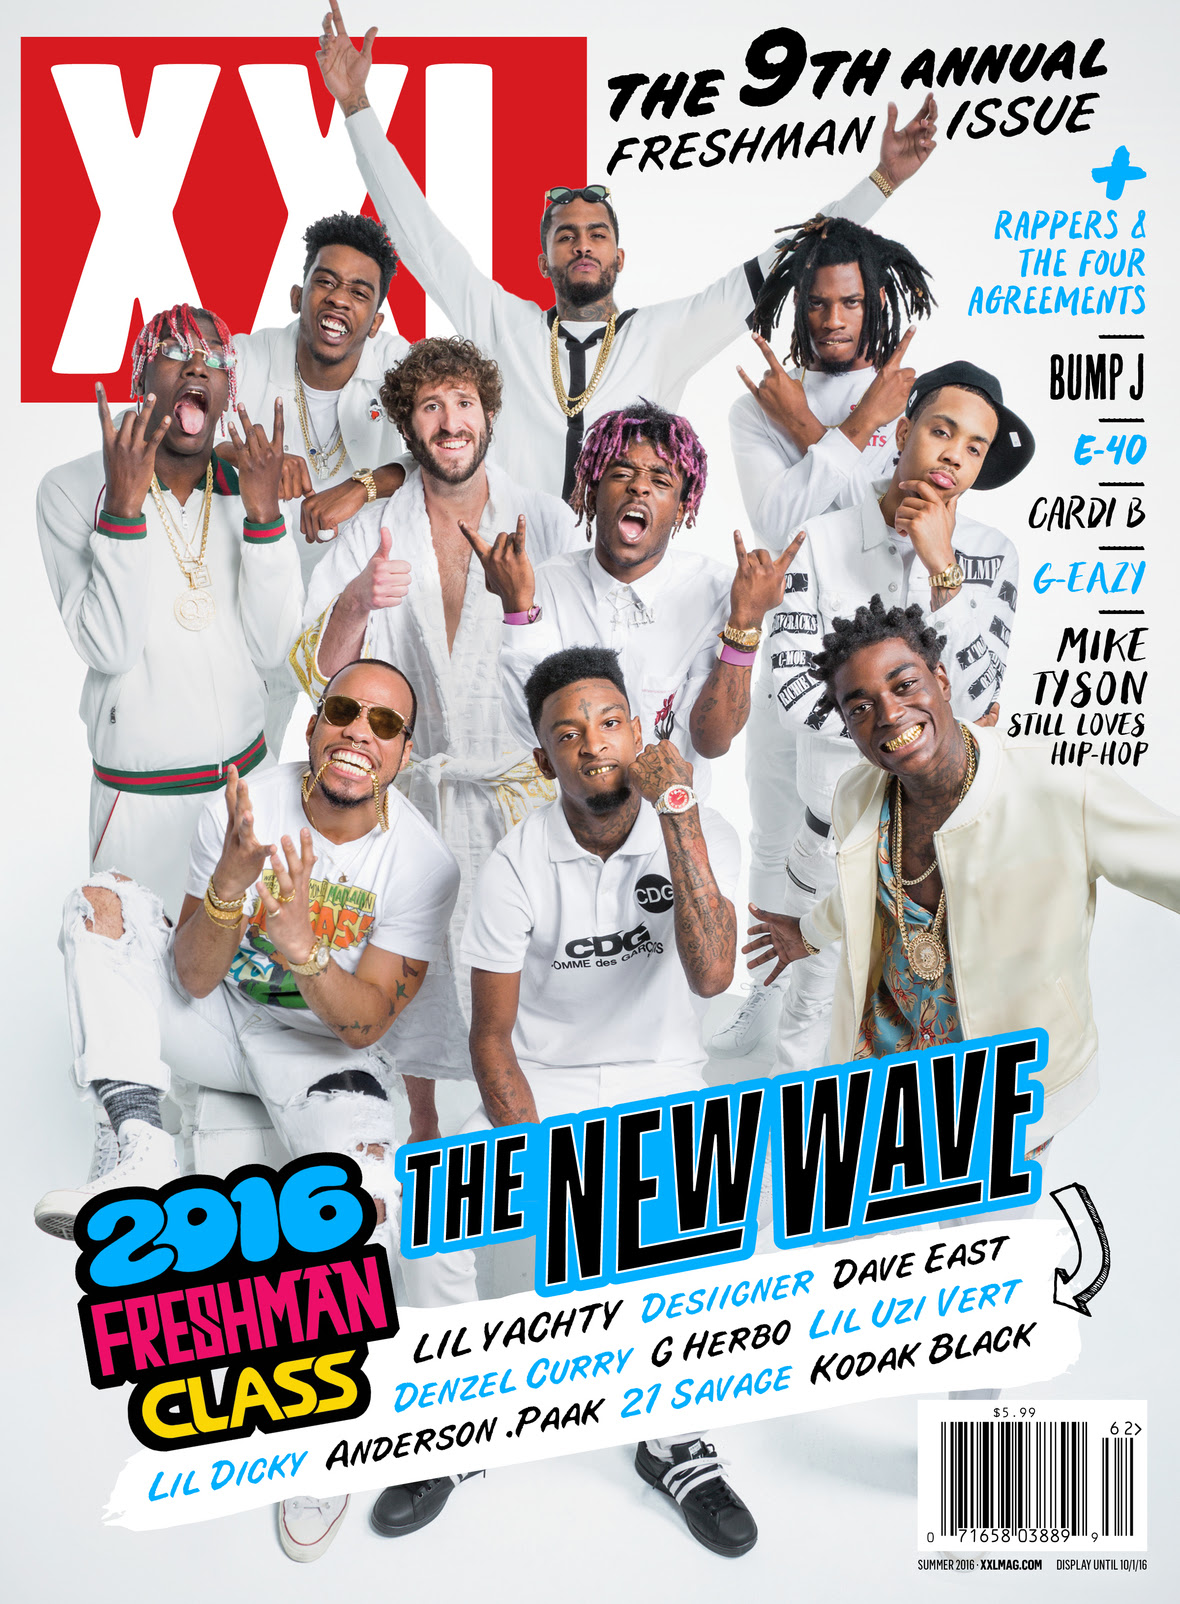 The XXL Magazine 2016 Freshman Class Cover Is Here